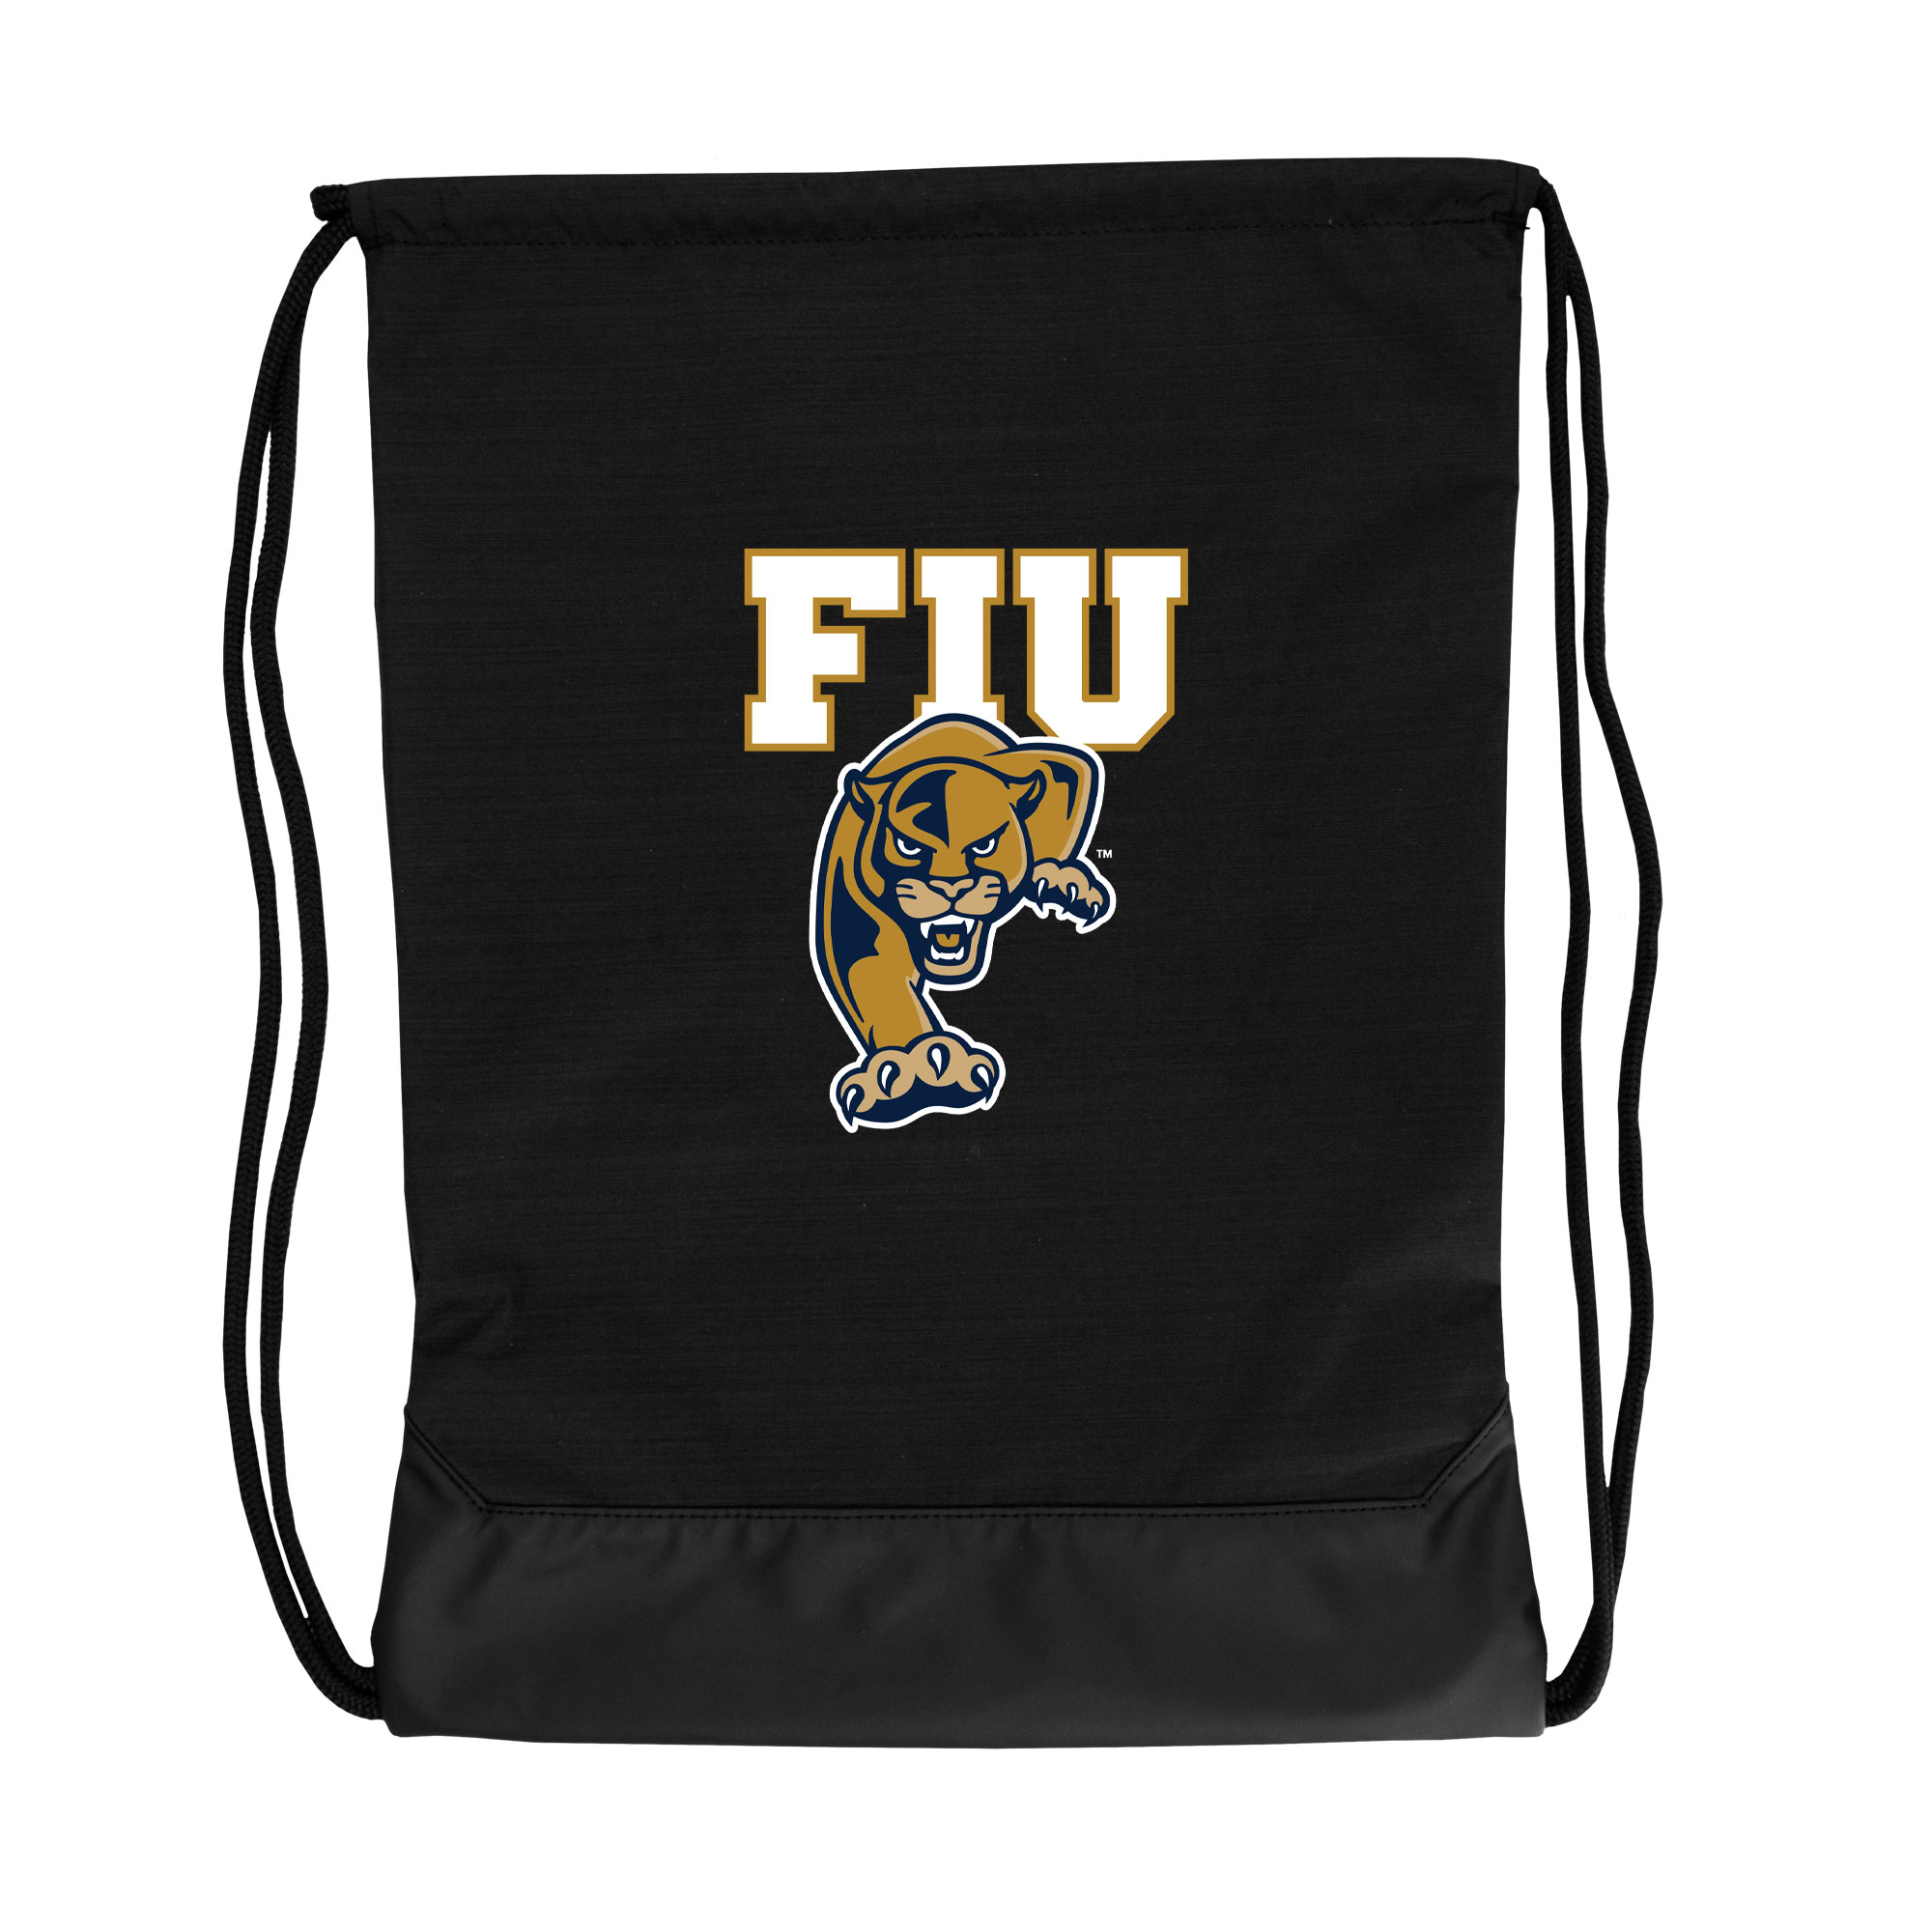 Florida International University Brasilia Gymsack Backpacks and Bags